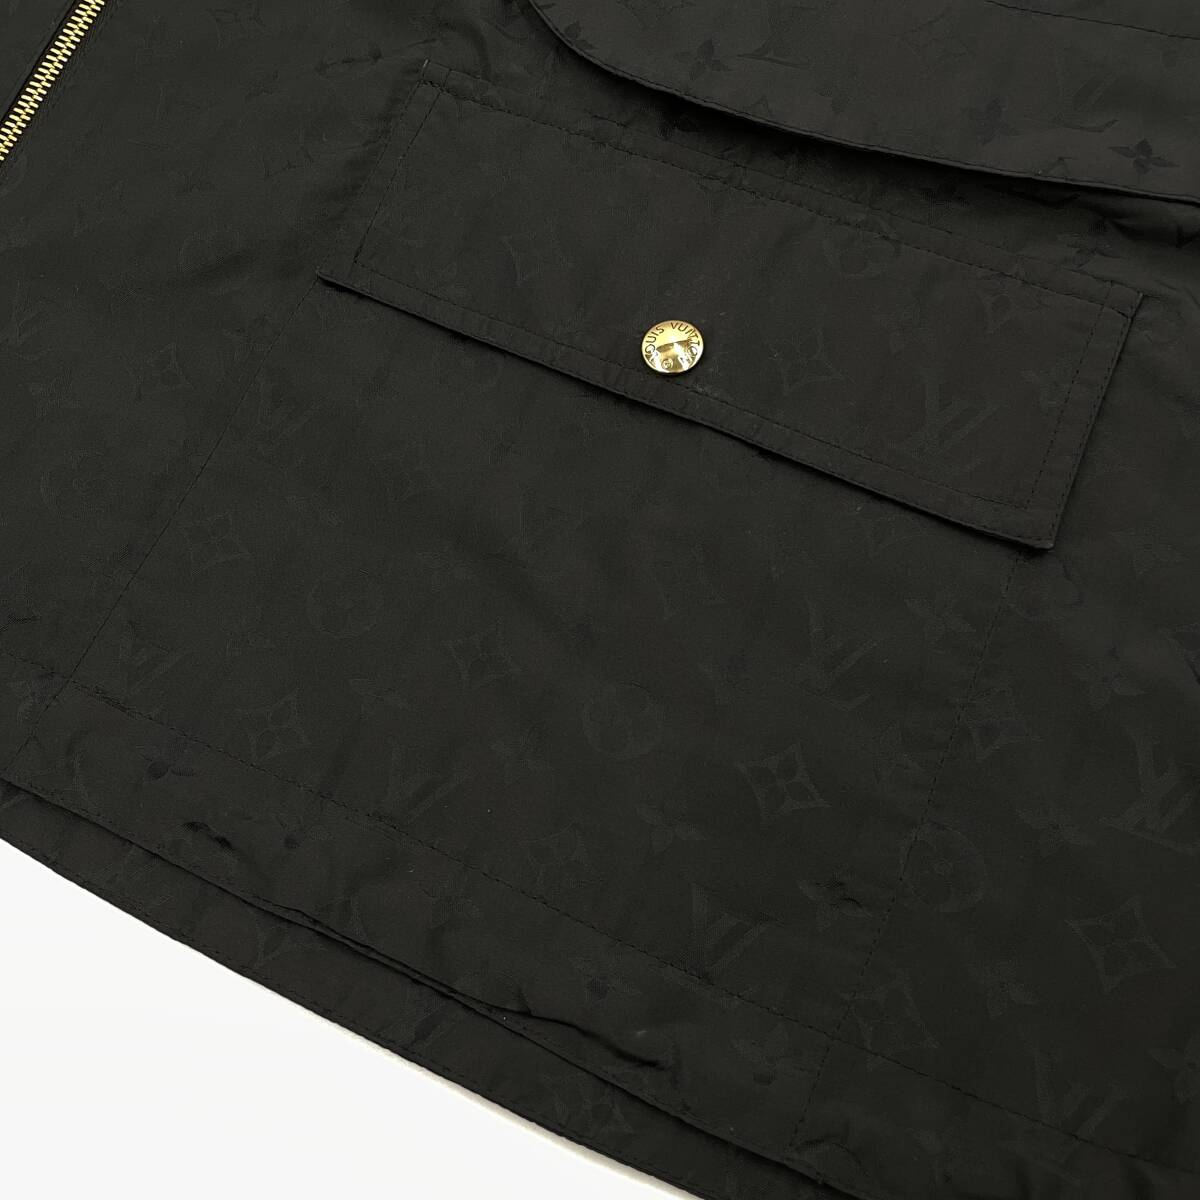 2021SS LOUIS VUITTON Louis Vuitton monogram f- dead cape coat poncho size 36[ regular price 488.000 jpy ]RW221B FLX FMOW82 0217051